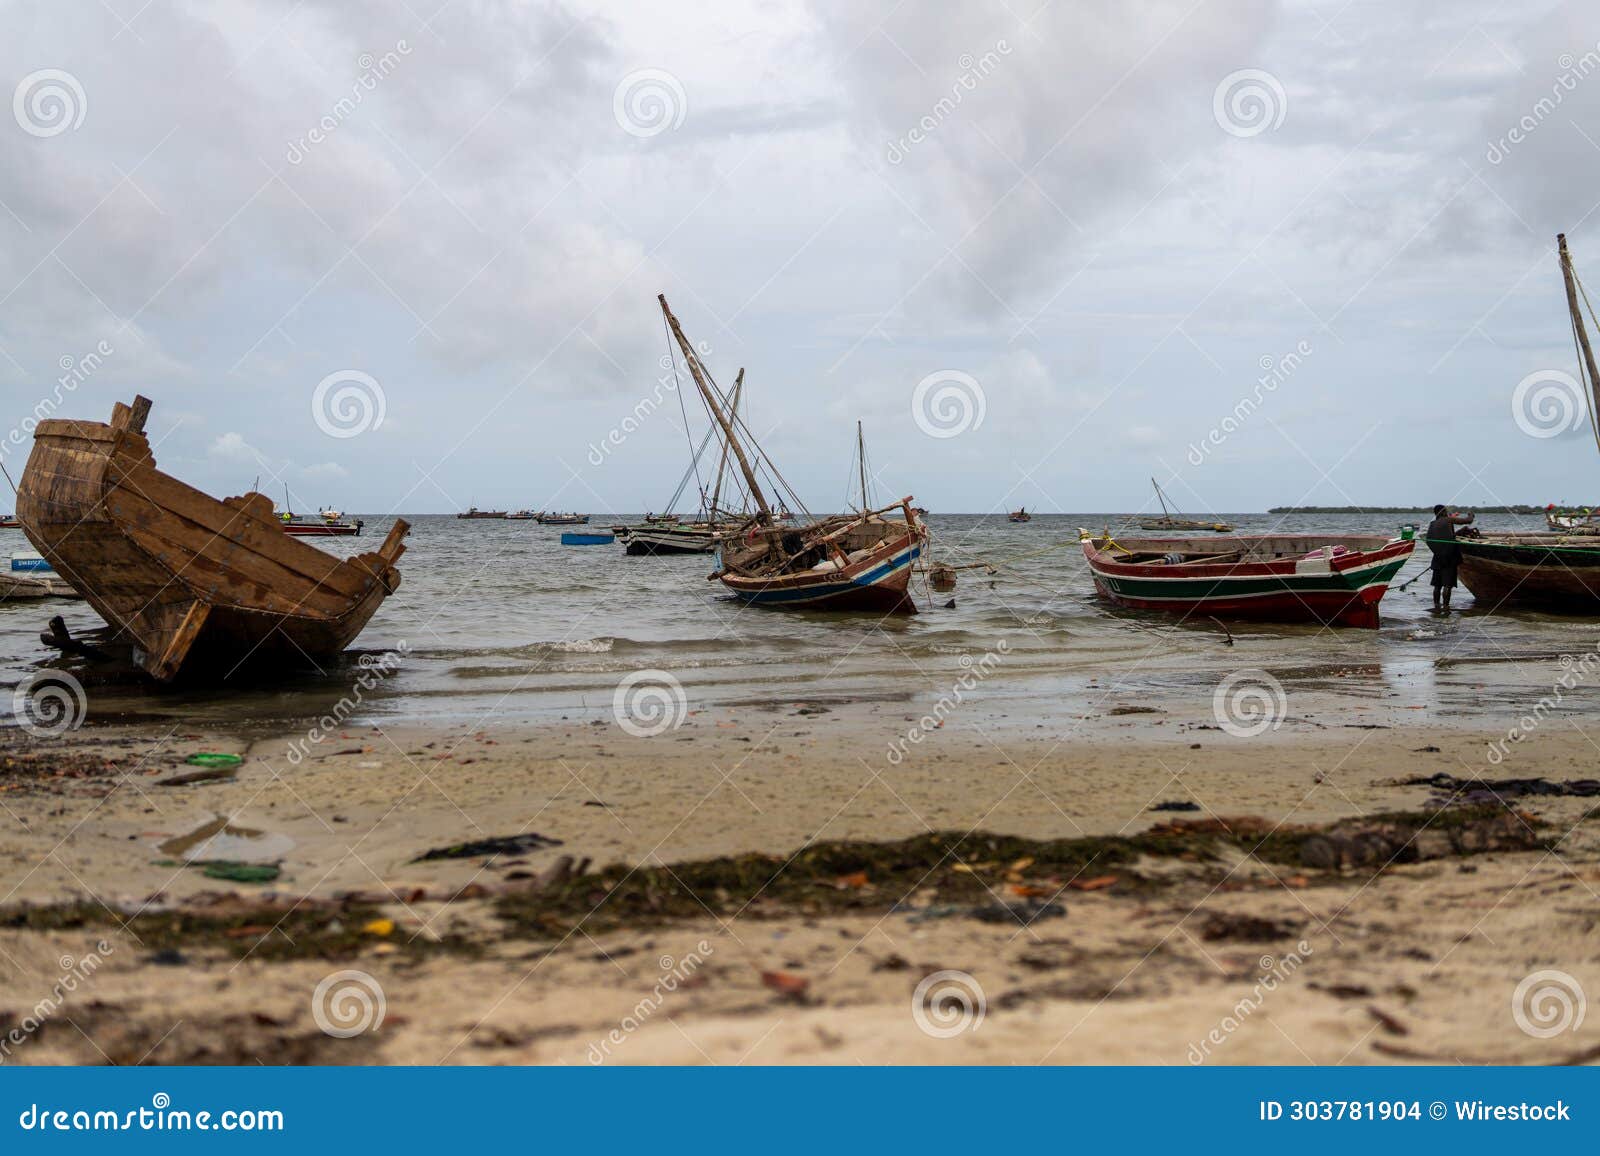 beach with boats in mocimboa da praia in cabo delgado province, mozambique